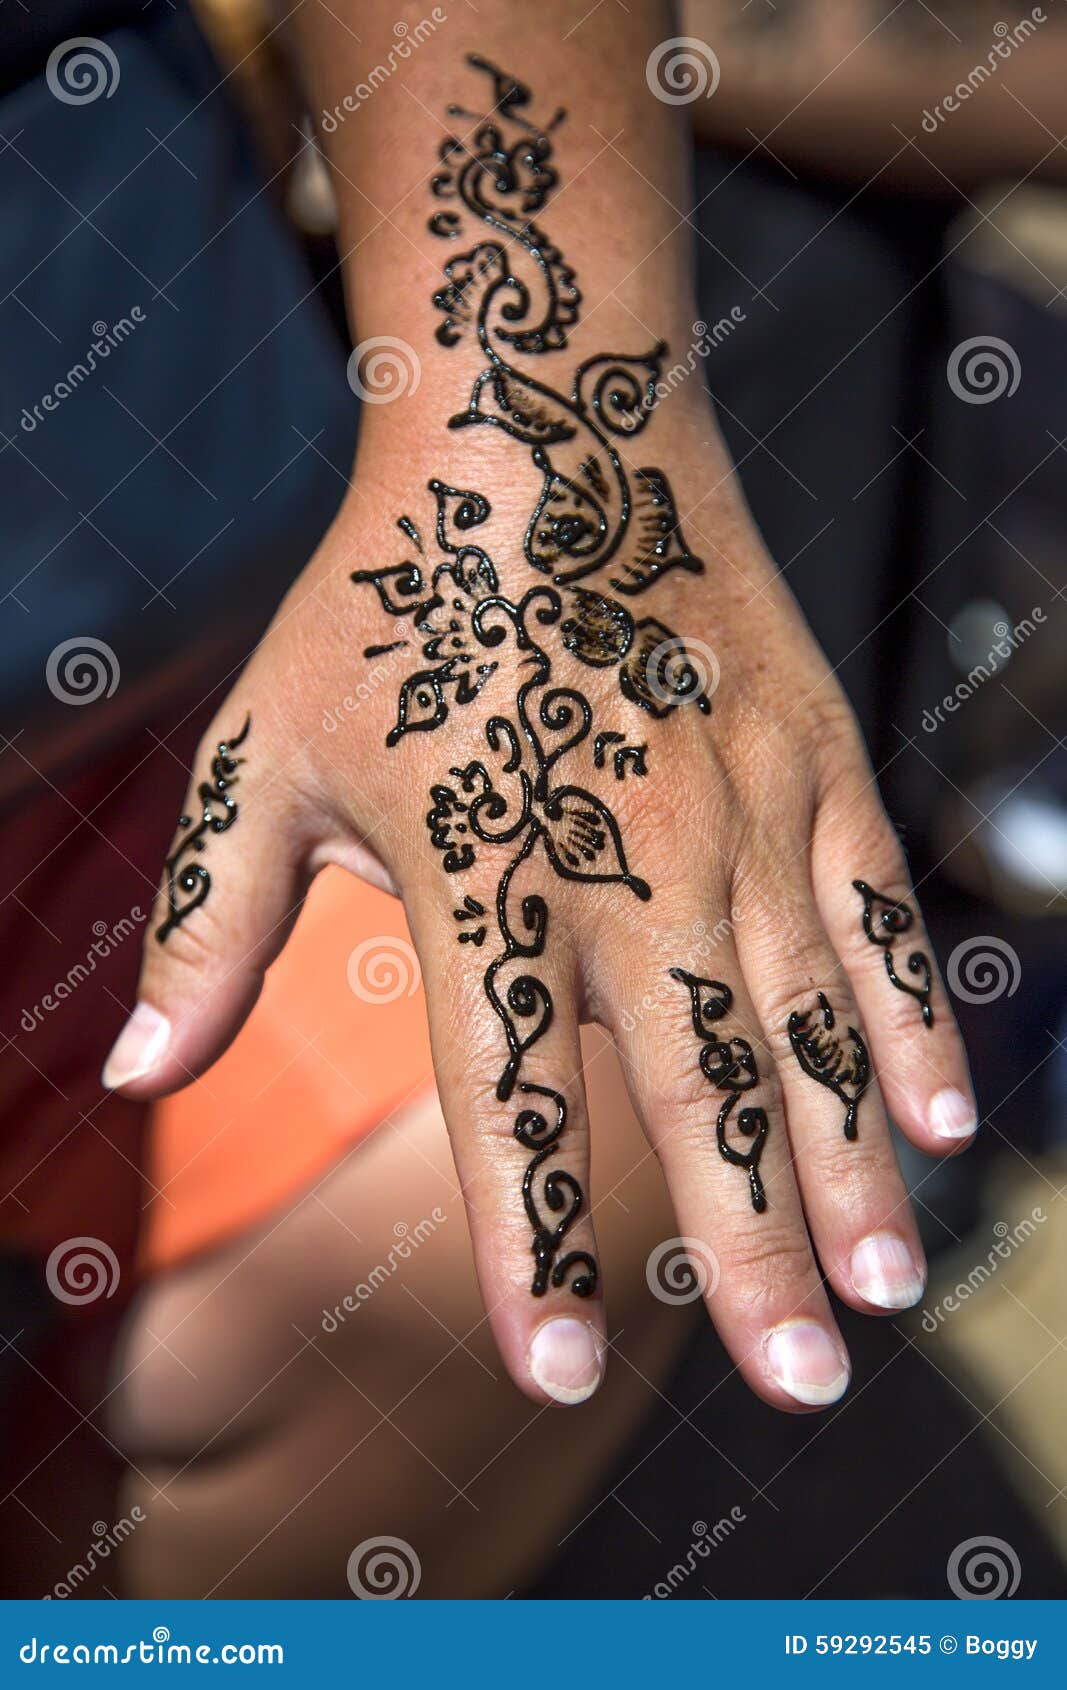 Aggregate more than 207 small henna tattoo latest